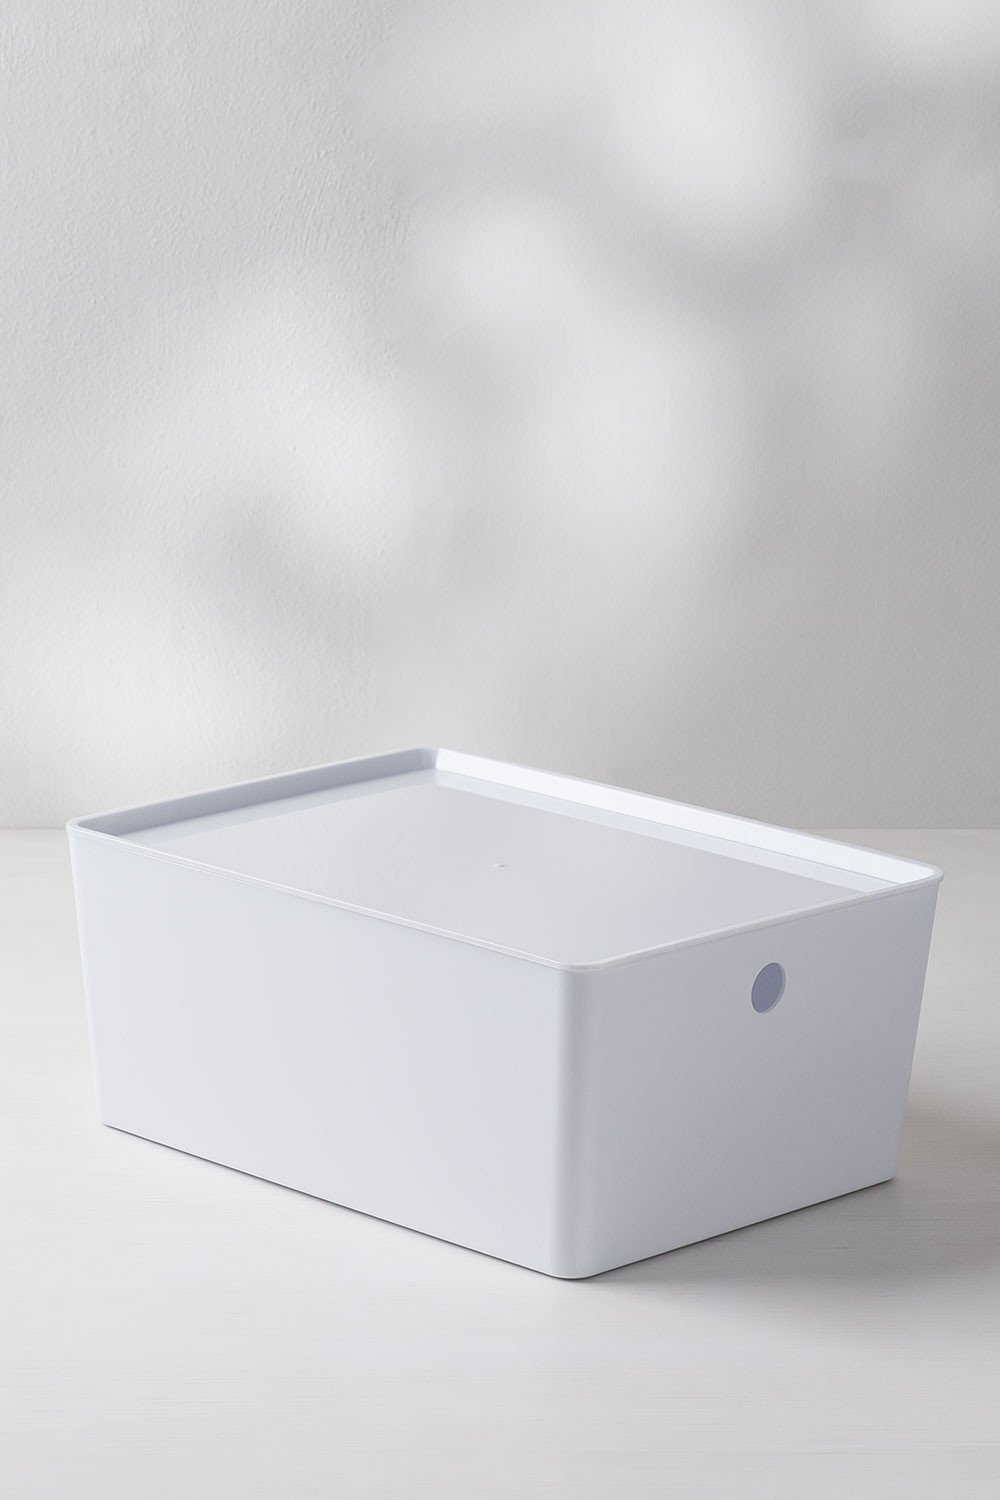 Meiyer Organiser Box, gallery image 1